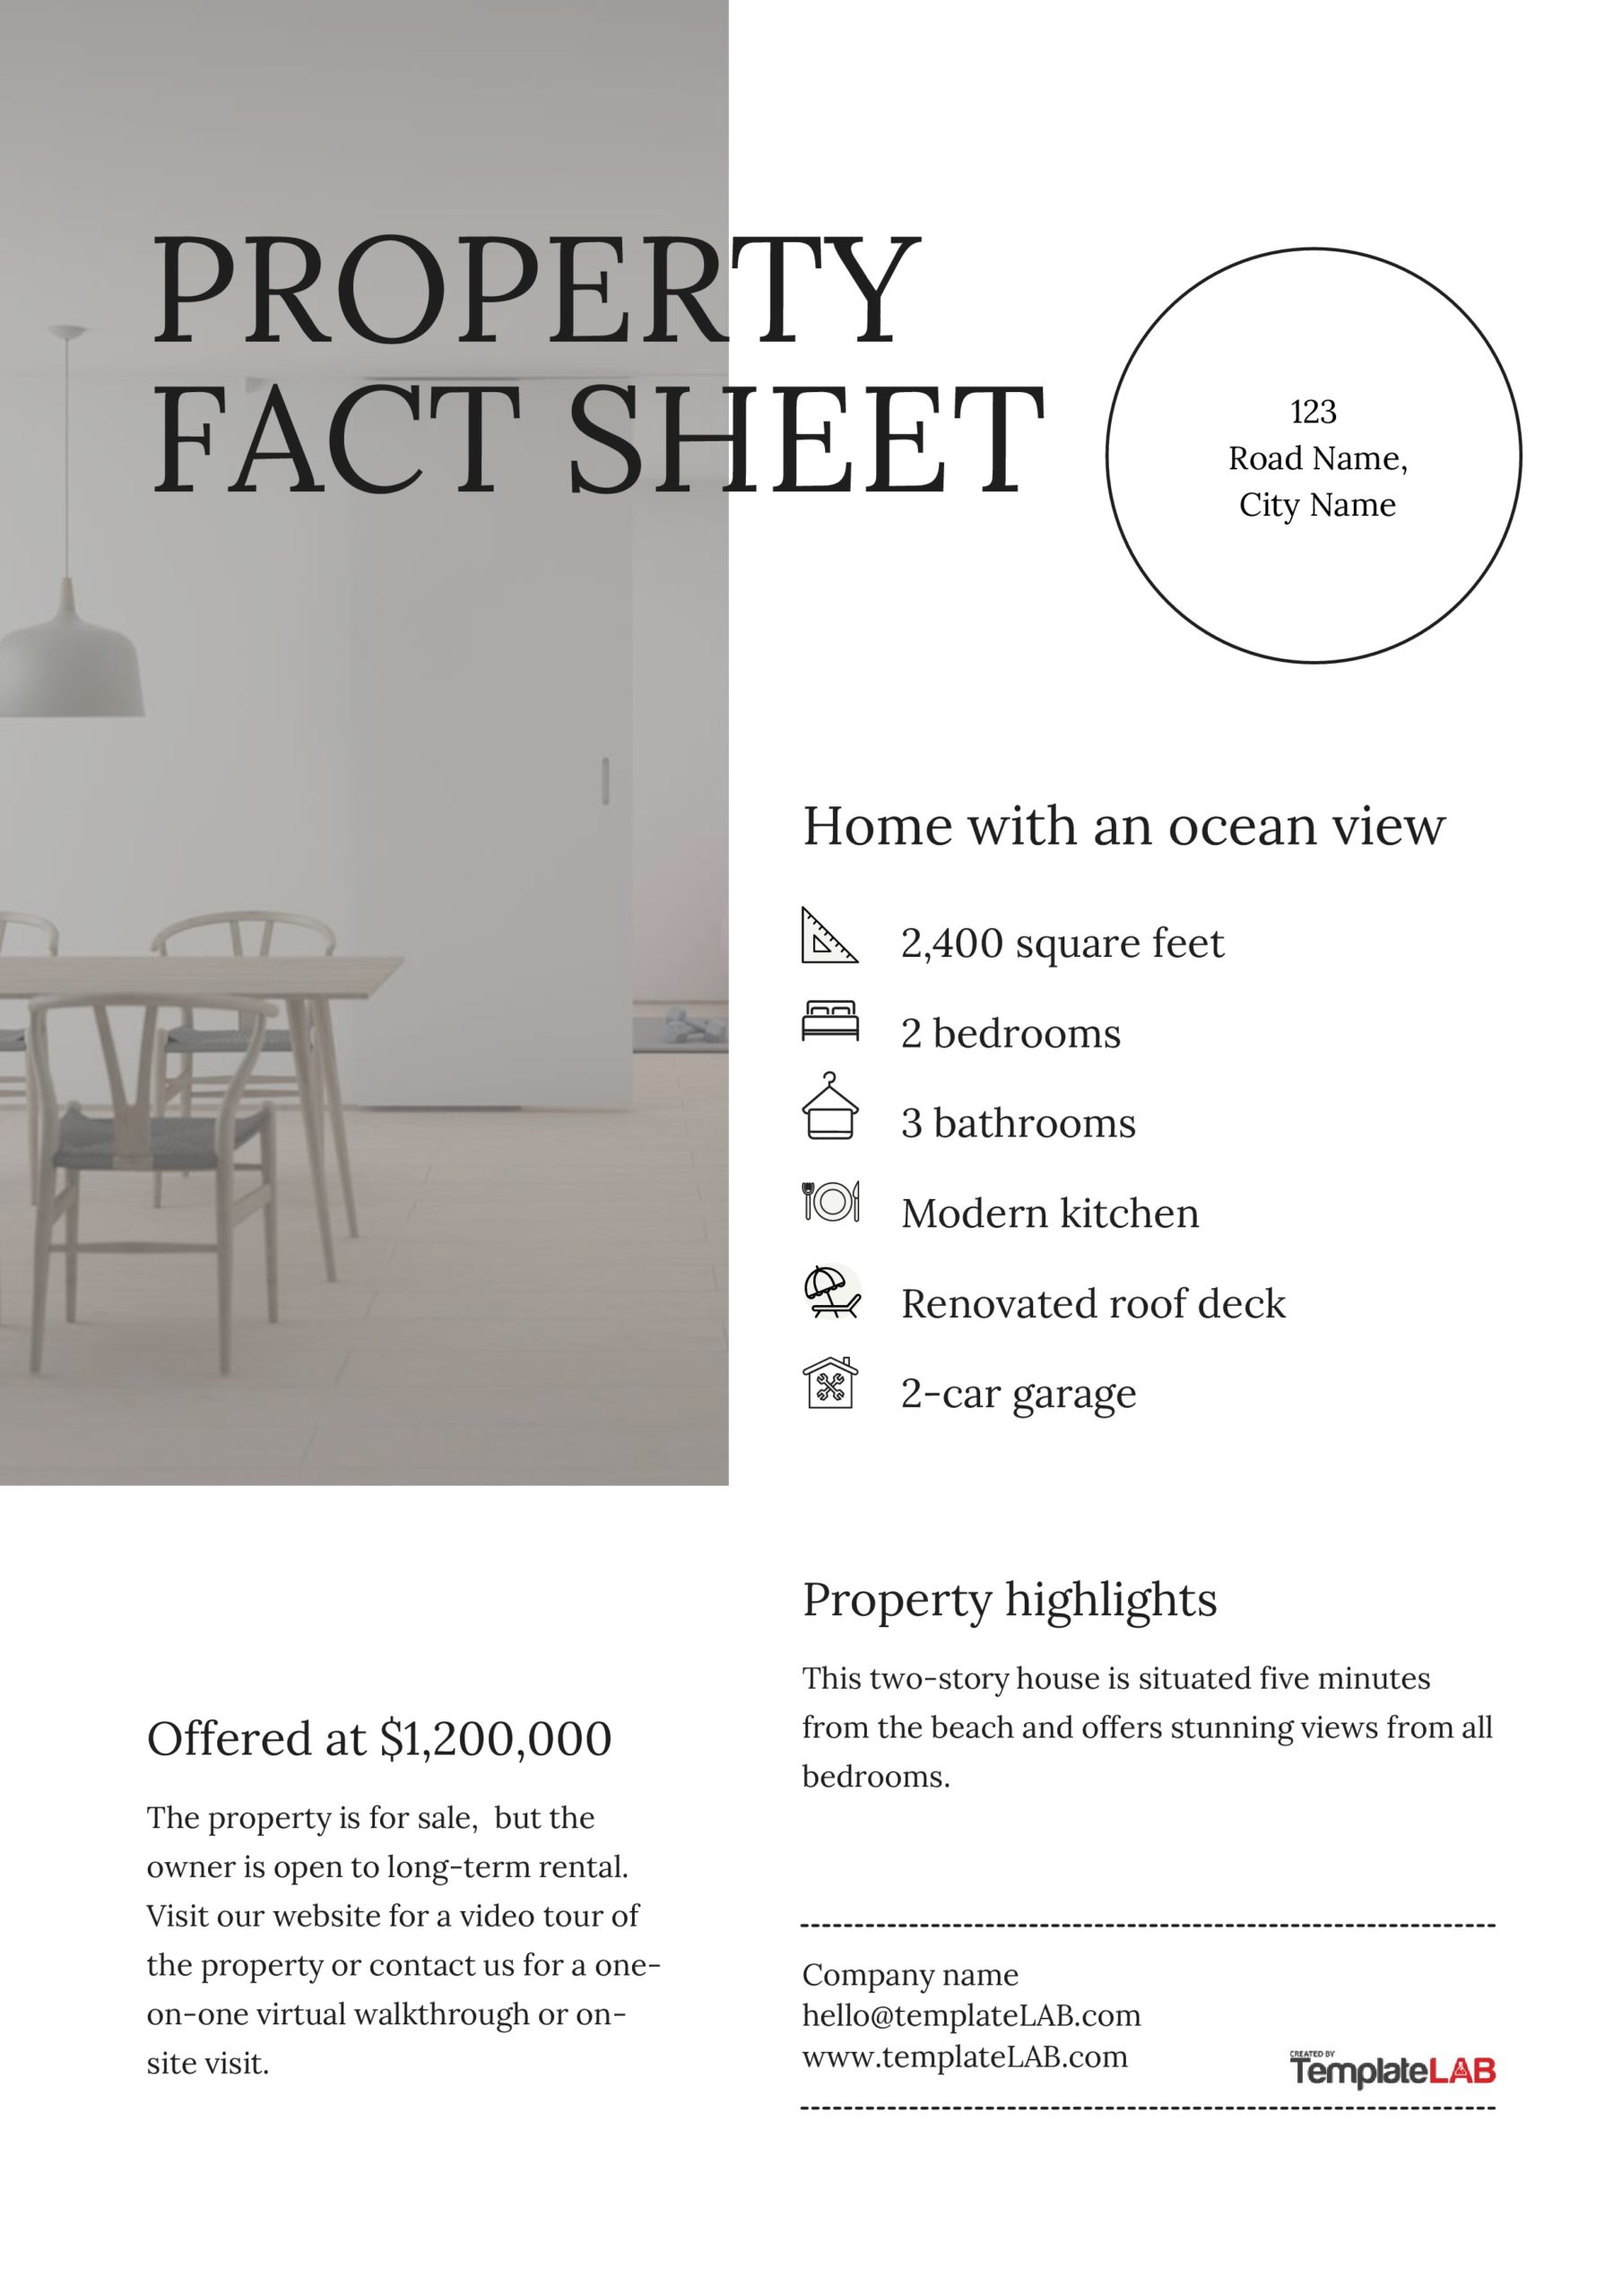 Free Property Fact Sheet Template